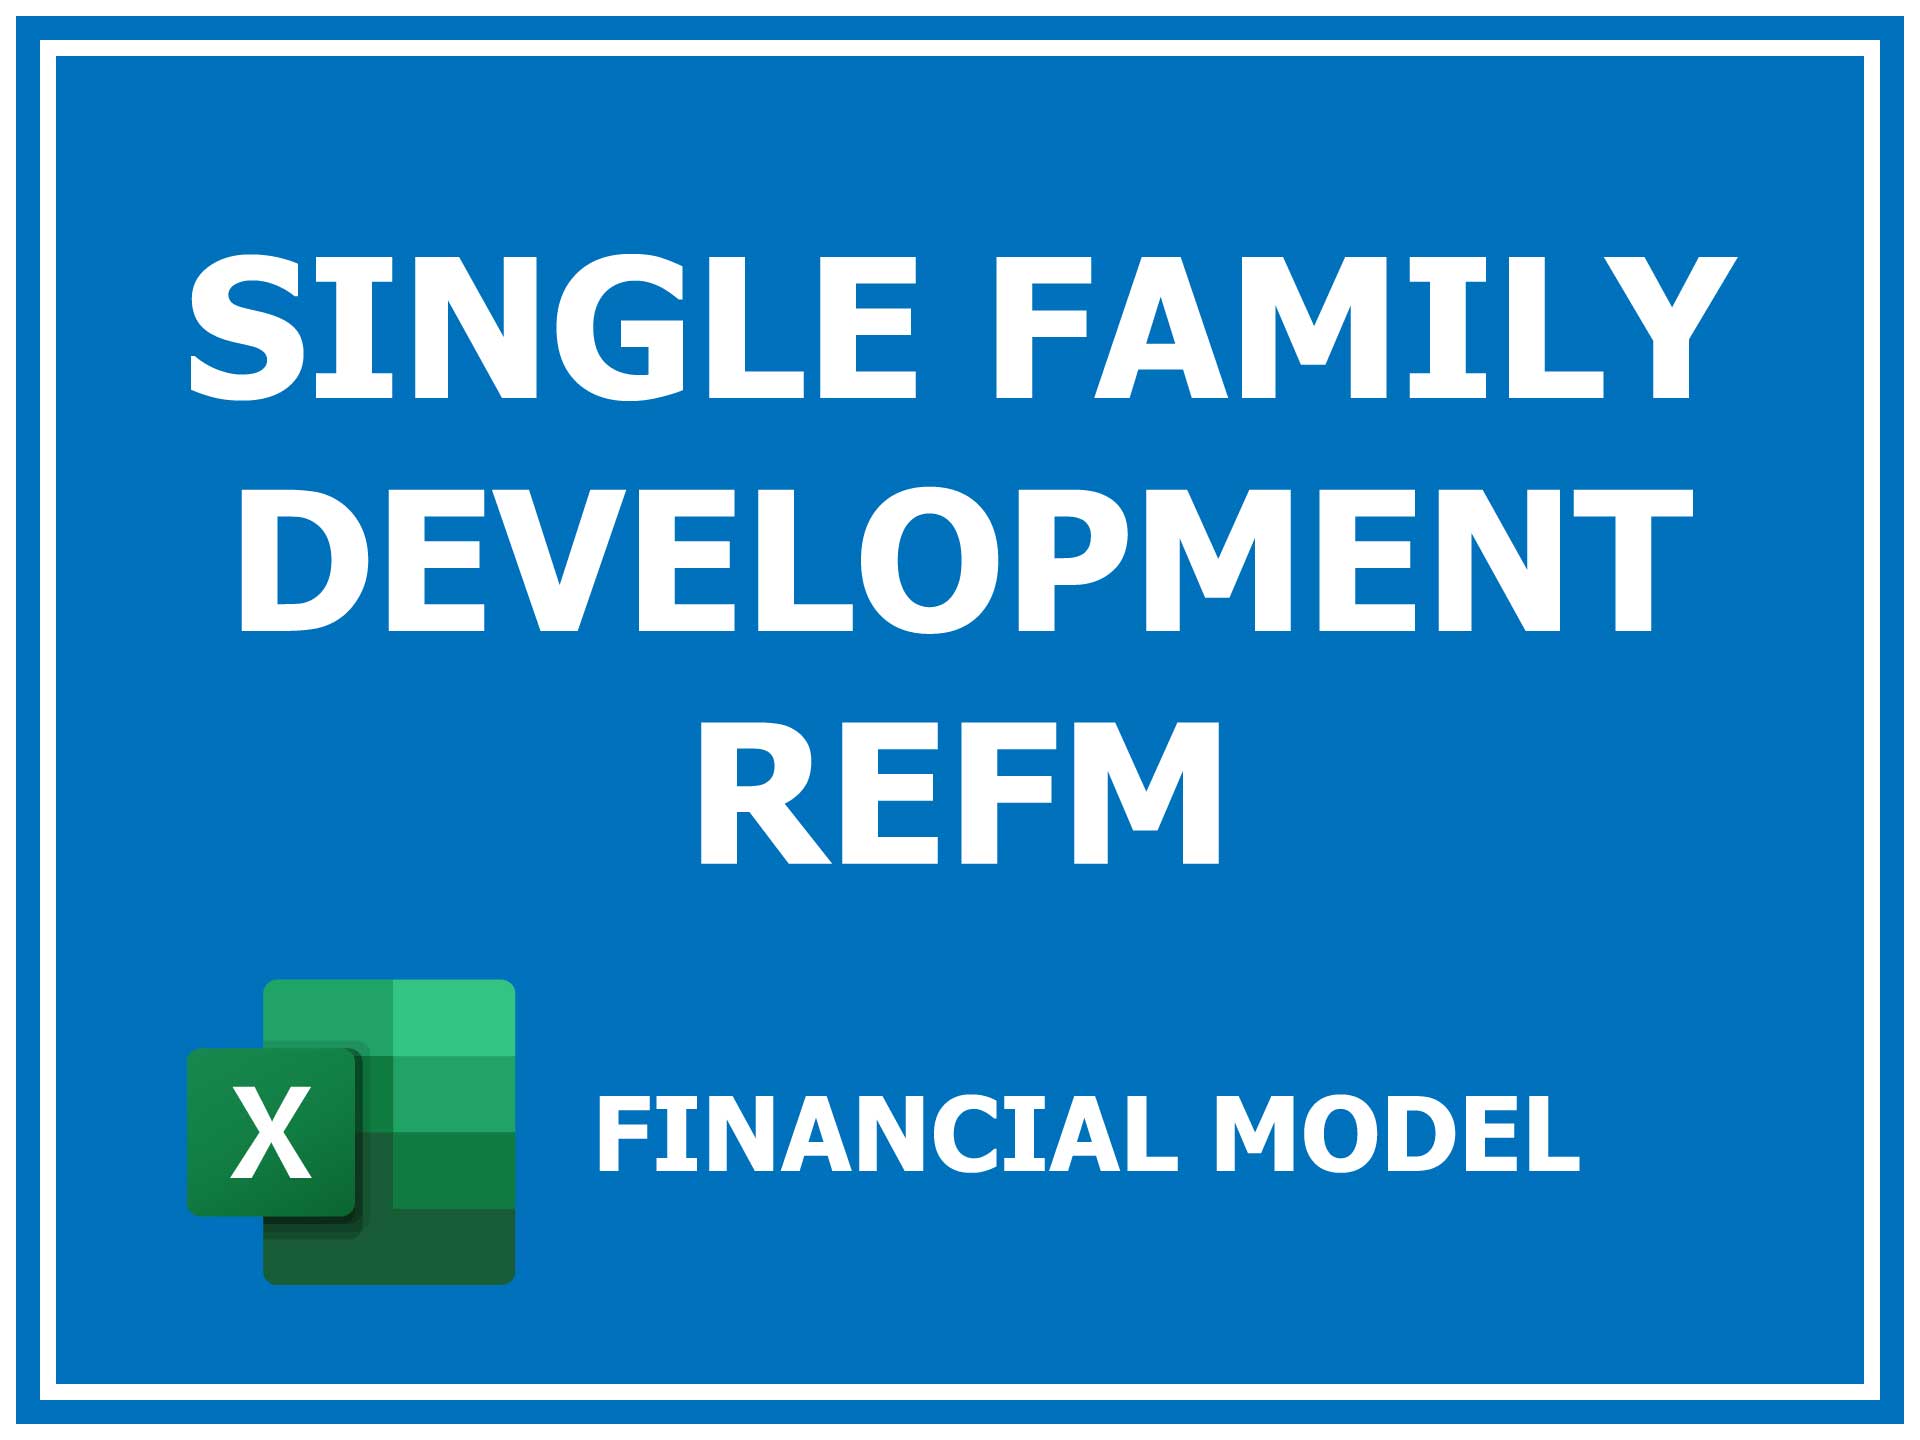 Single Family Development Refm